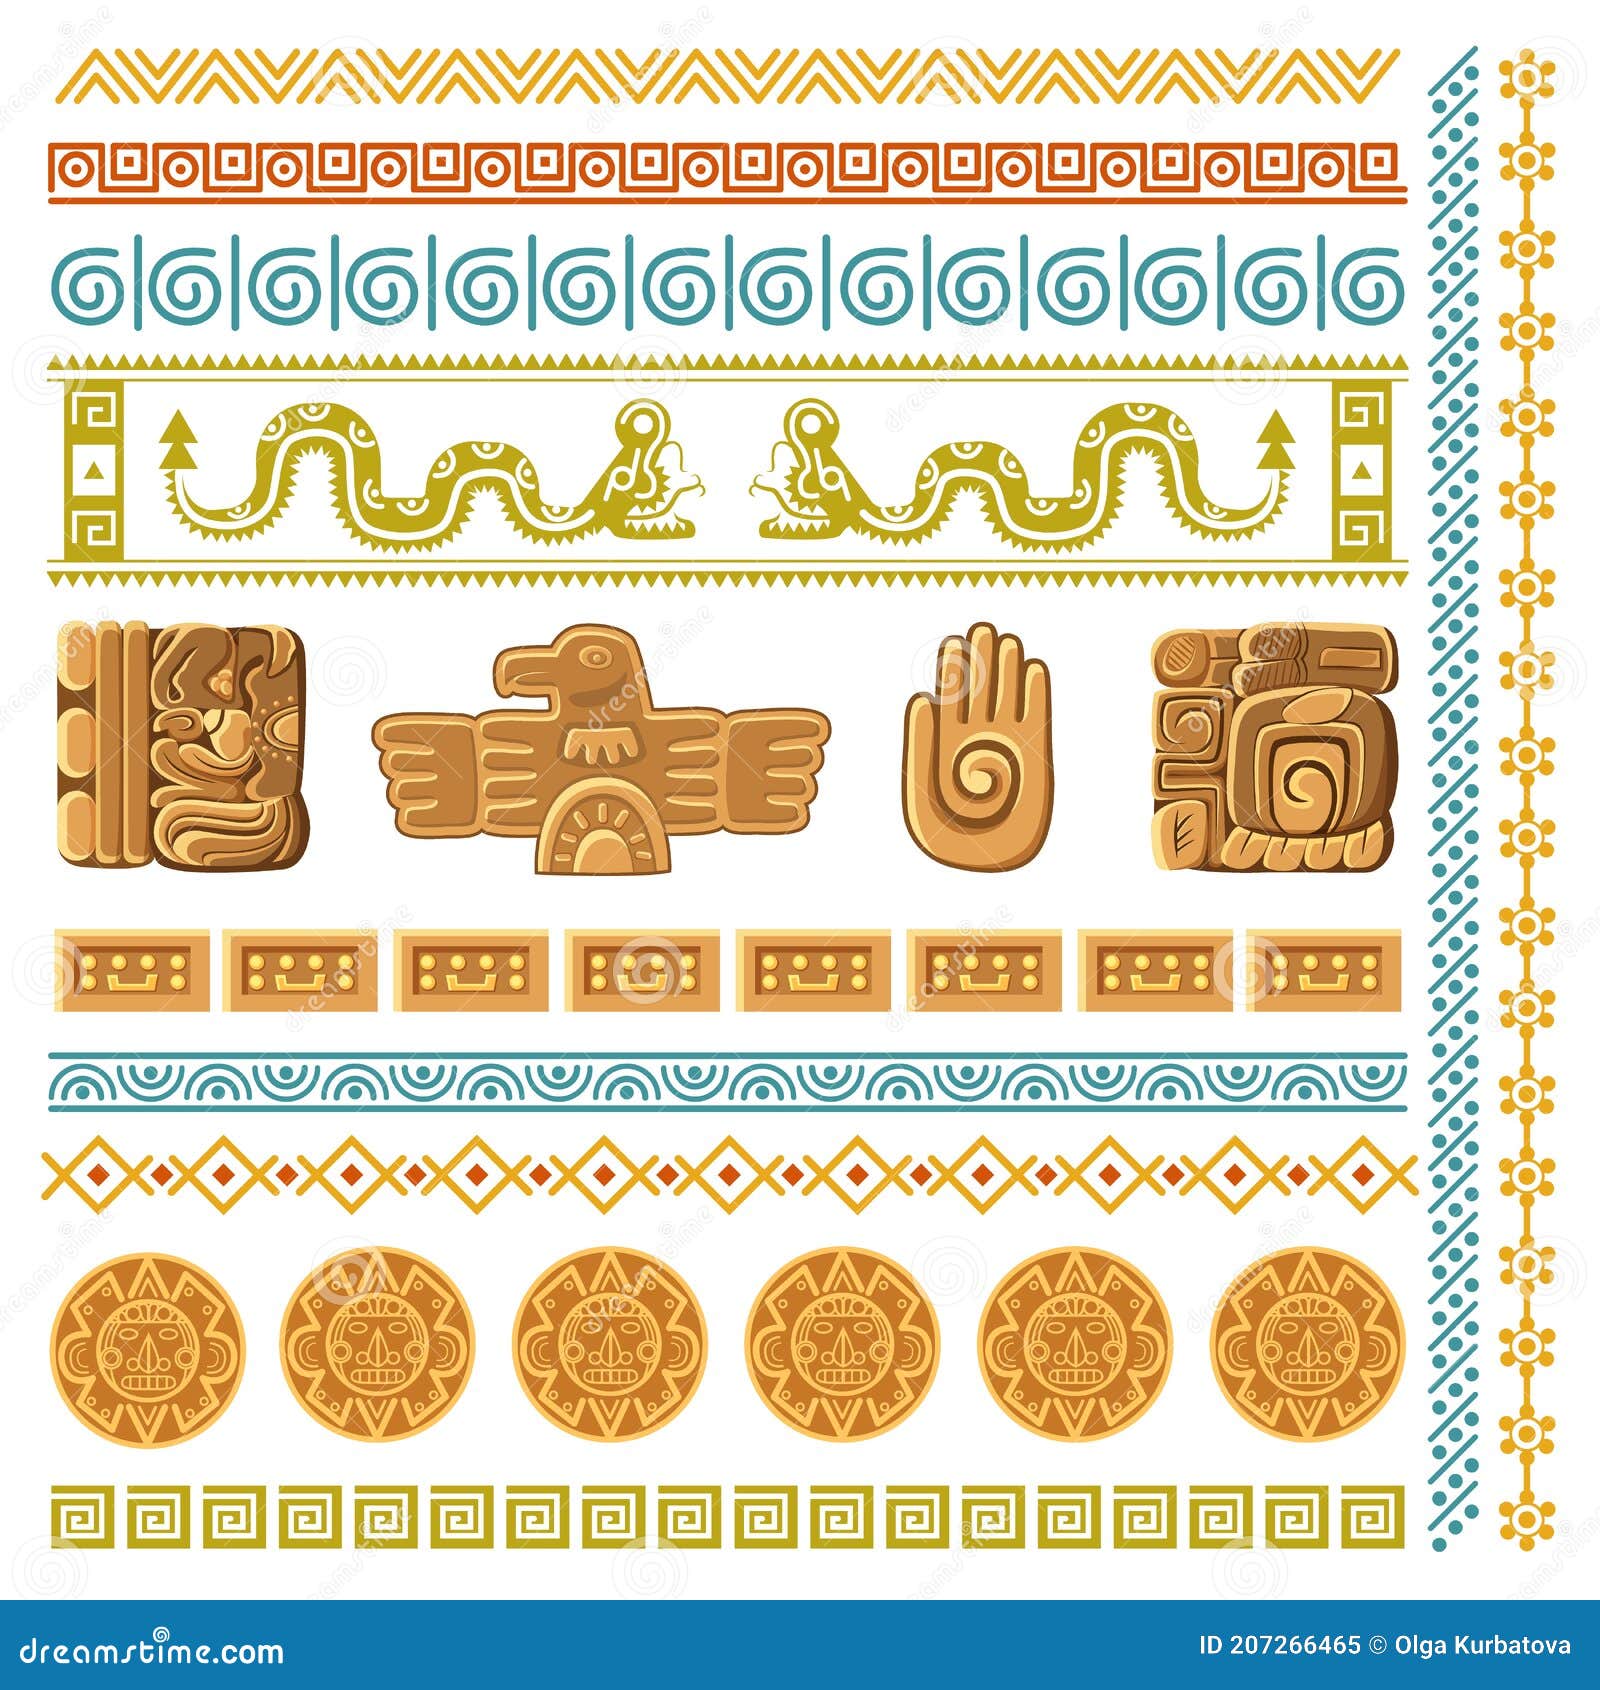 maya civilization graphics patterns. aztec decoration s frames and borders, inca ancient art s and